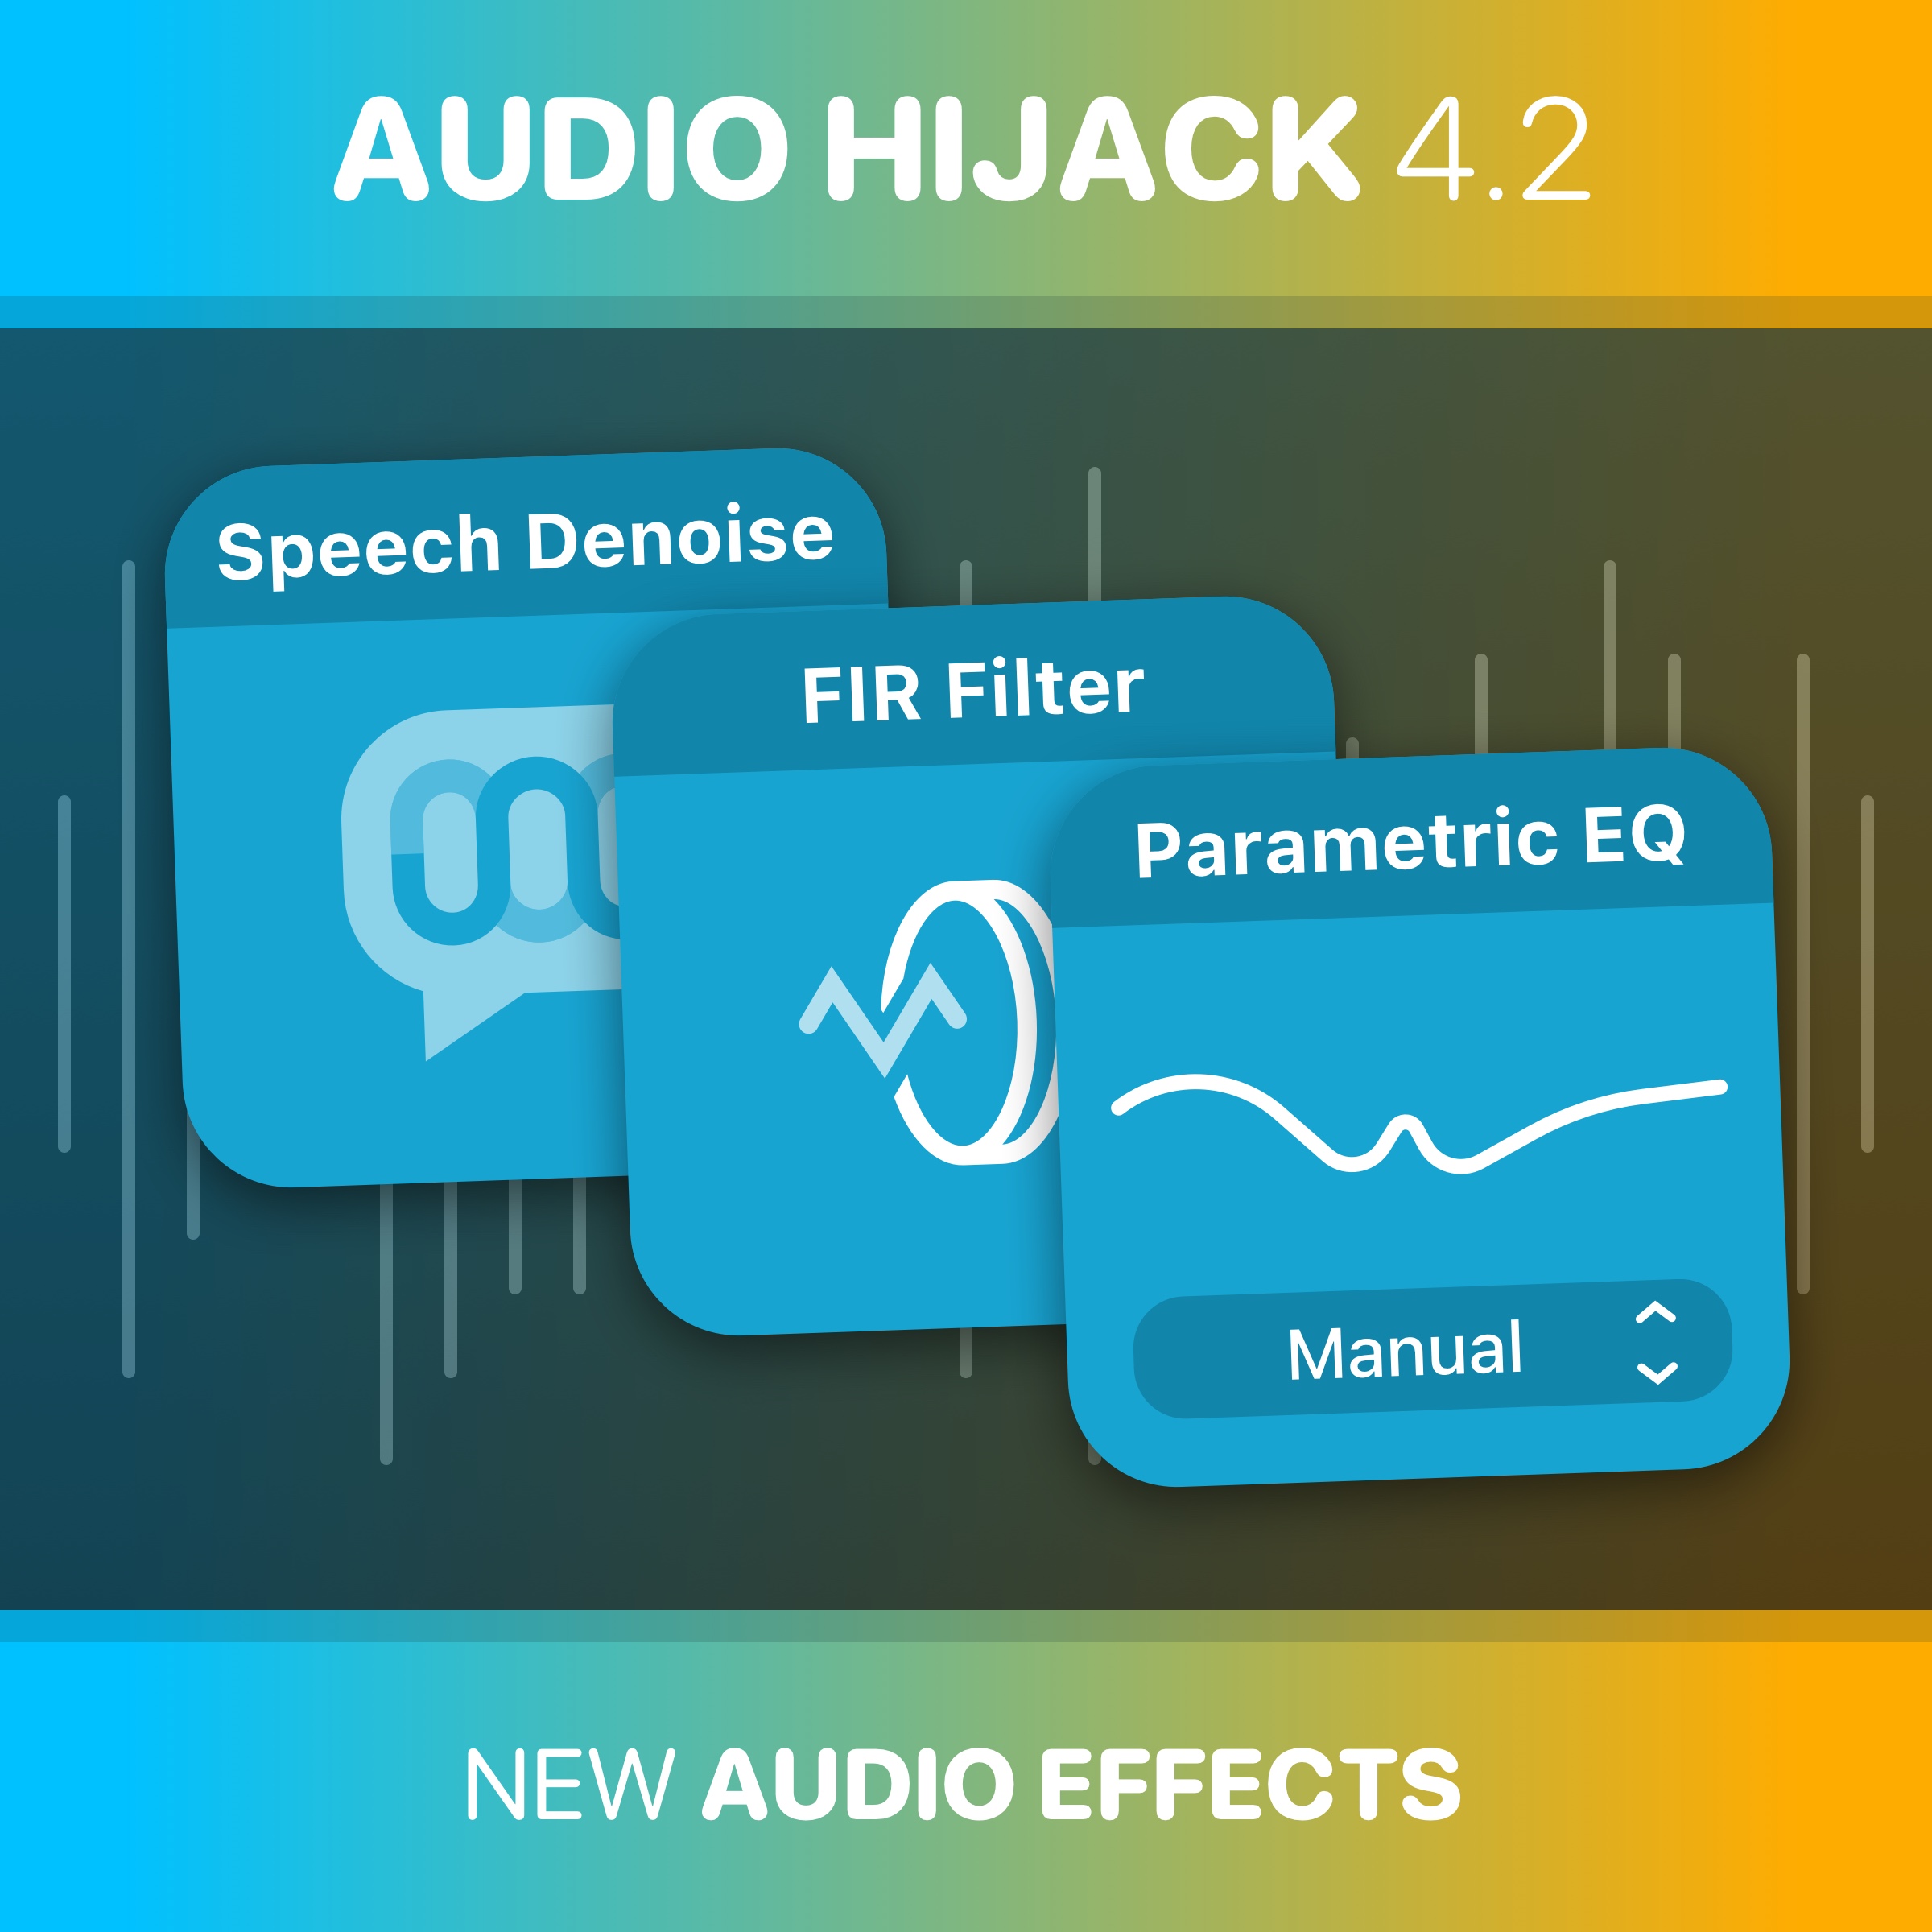 Three new audio effects